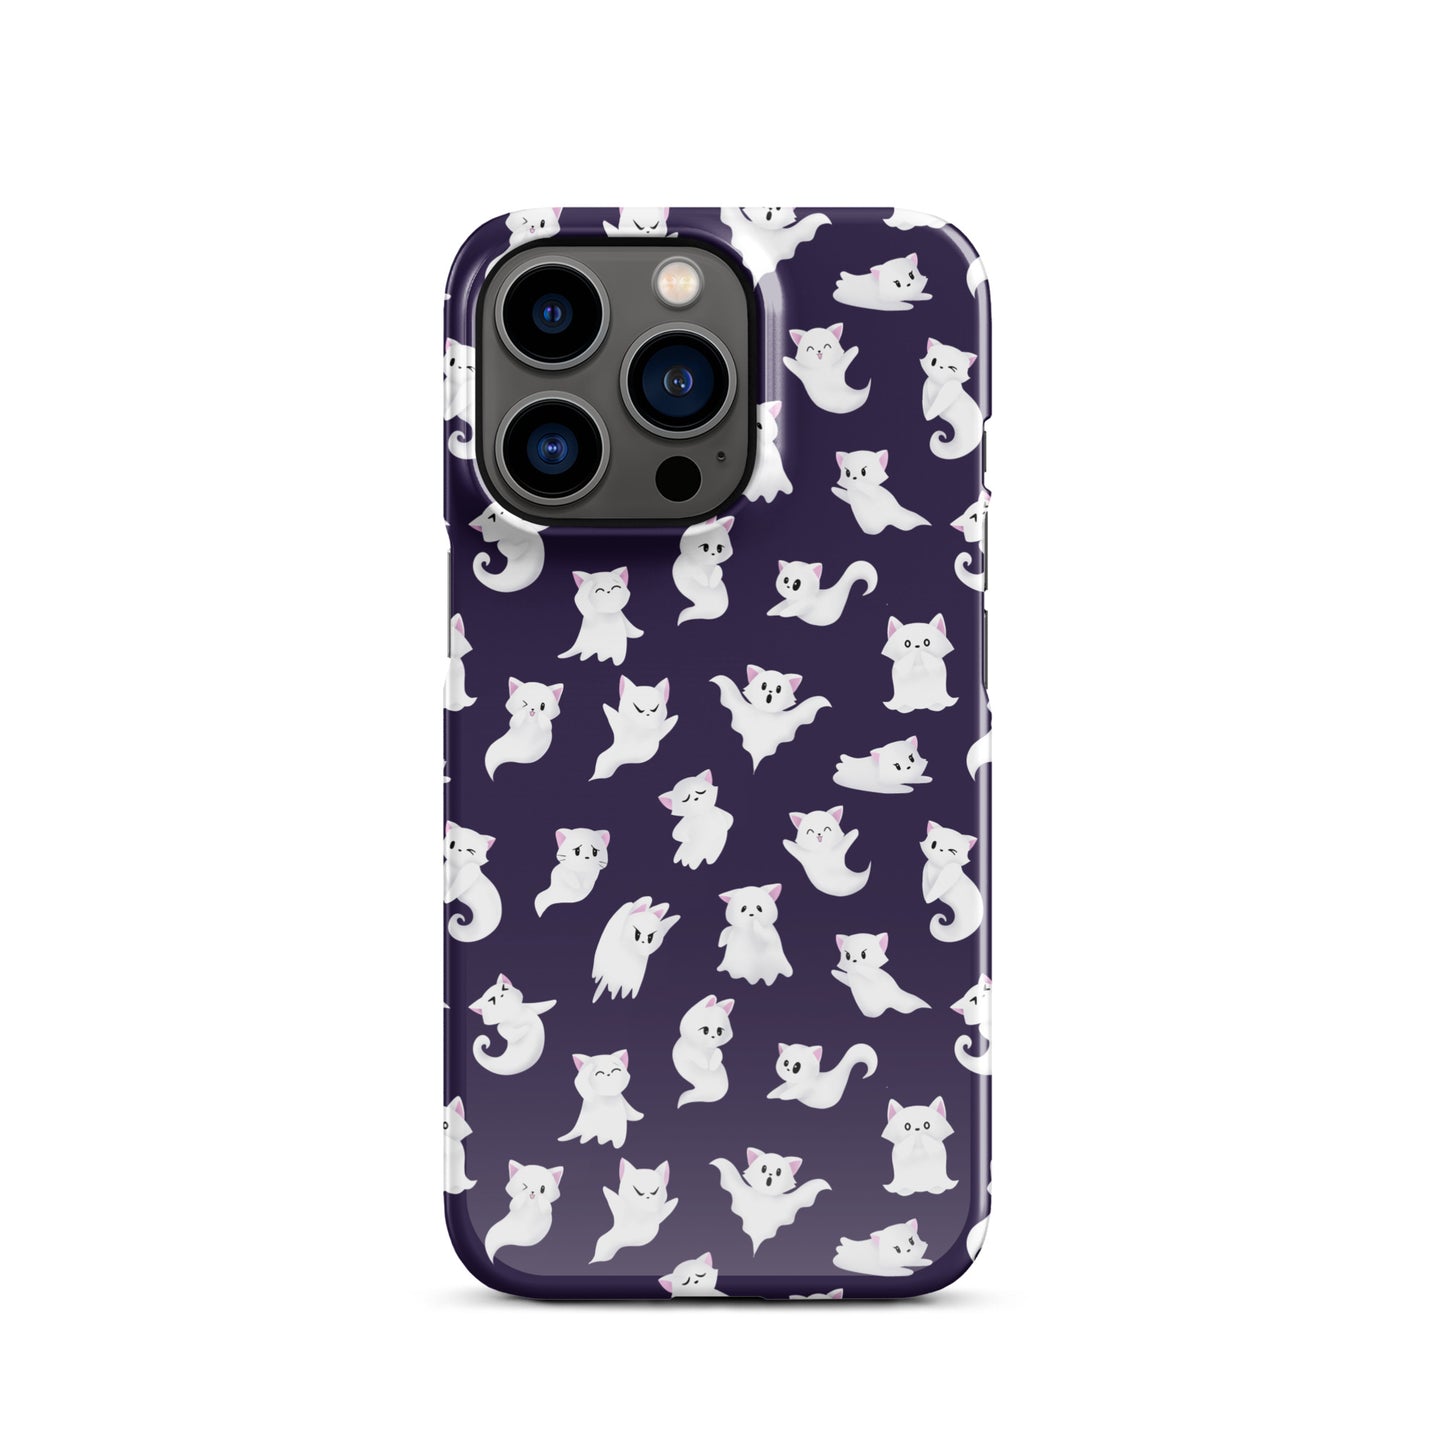 Ghost Kitties iPhone Snap Case